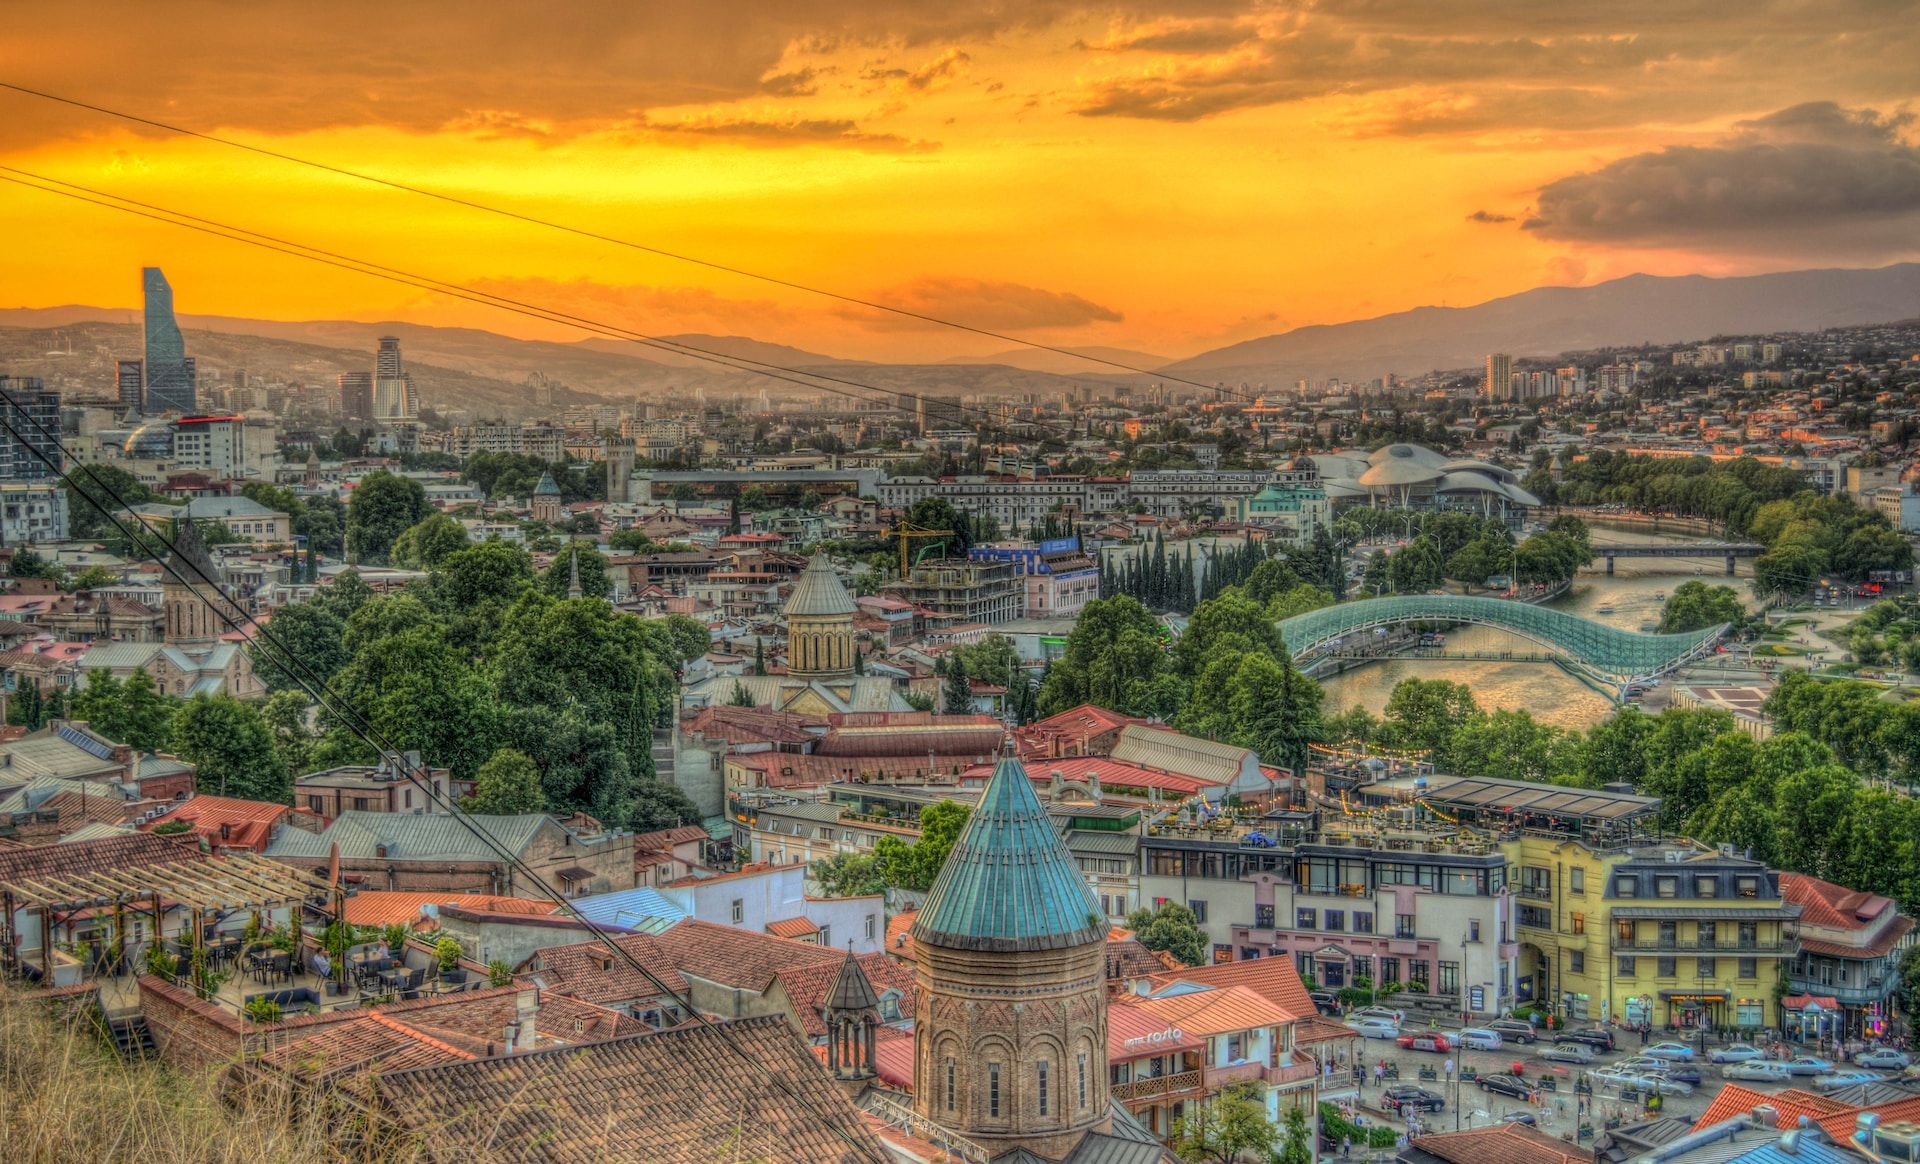 A sunset view of Tbilisi, Georgia